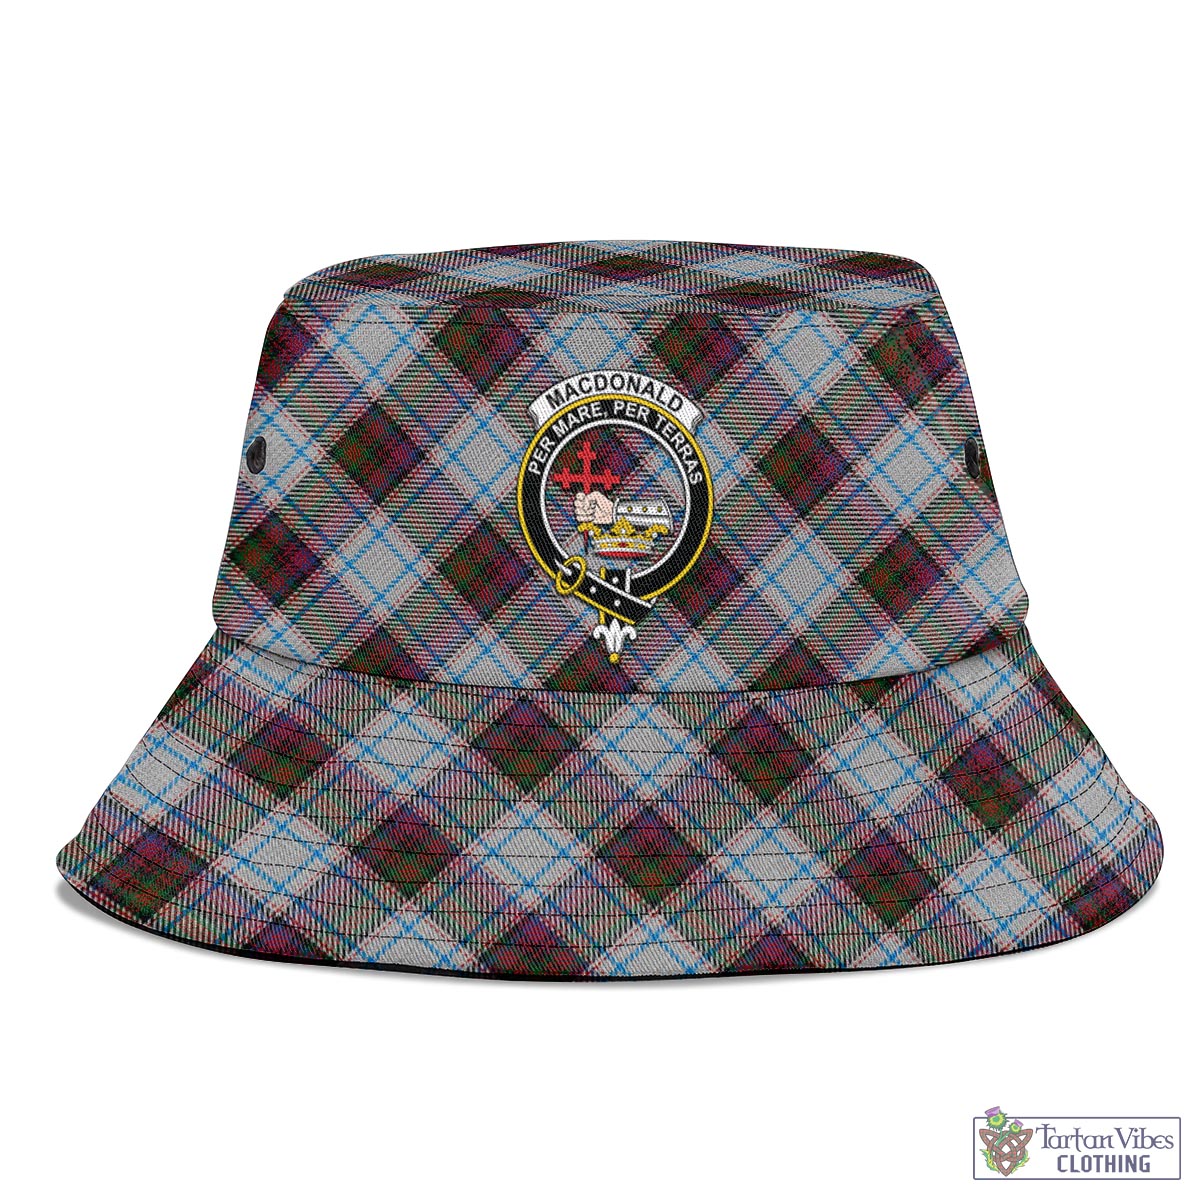 Tartan Vibes Clothing MacDonald Dress Ancient Tartan Bucket Hat with Family Crest